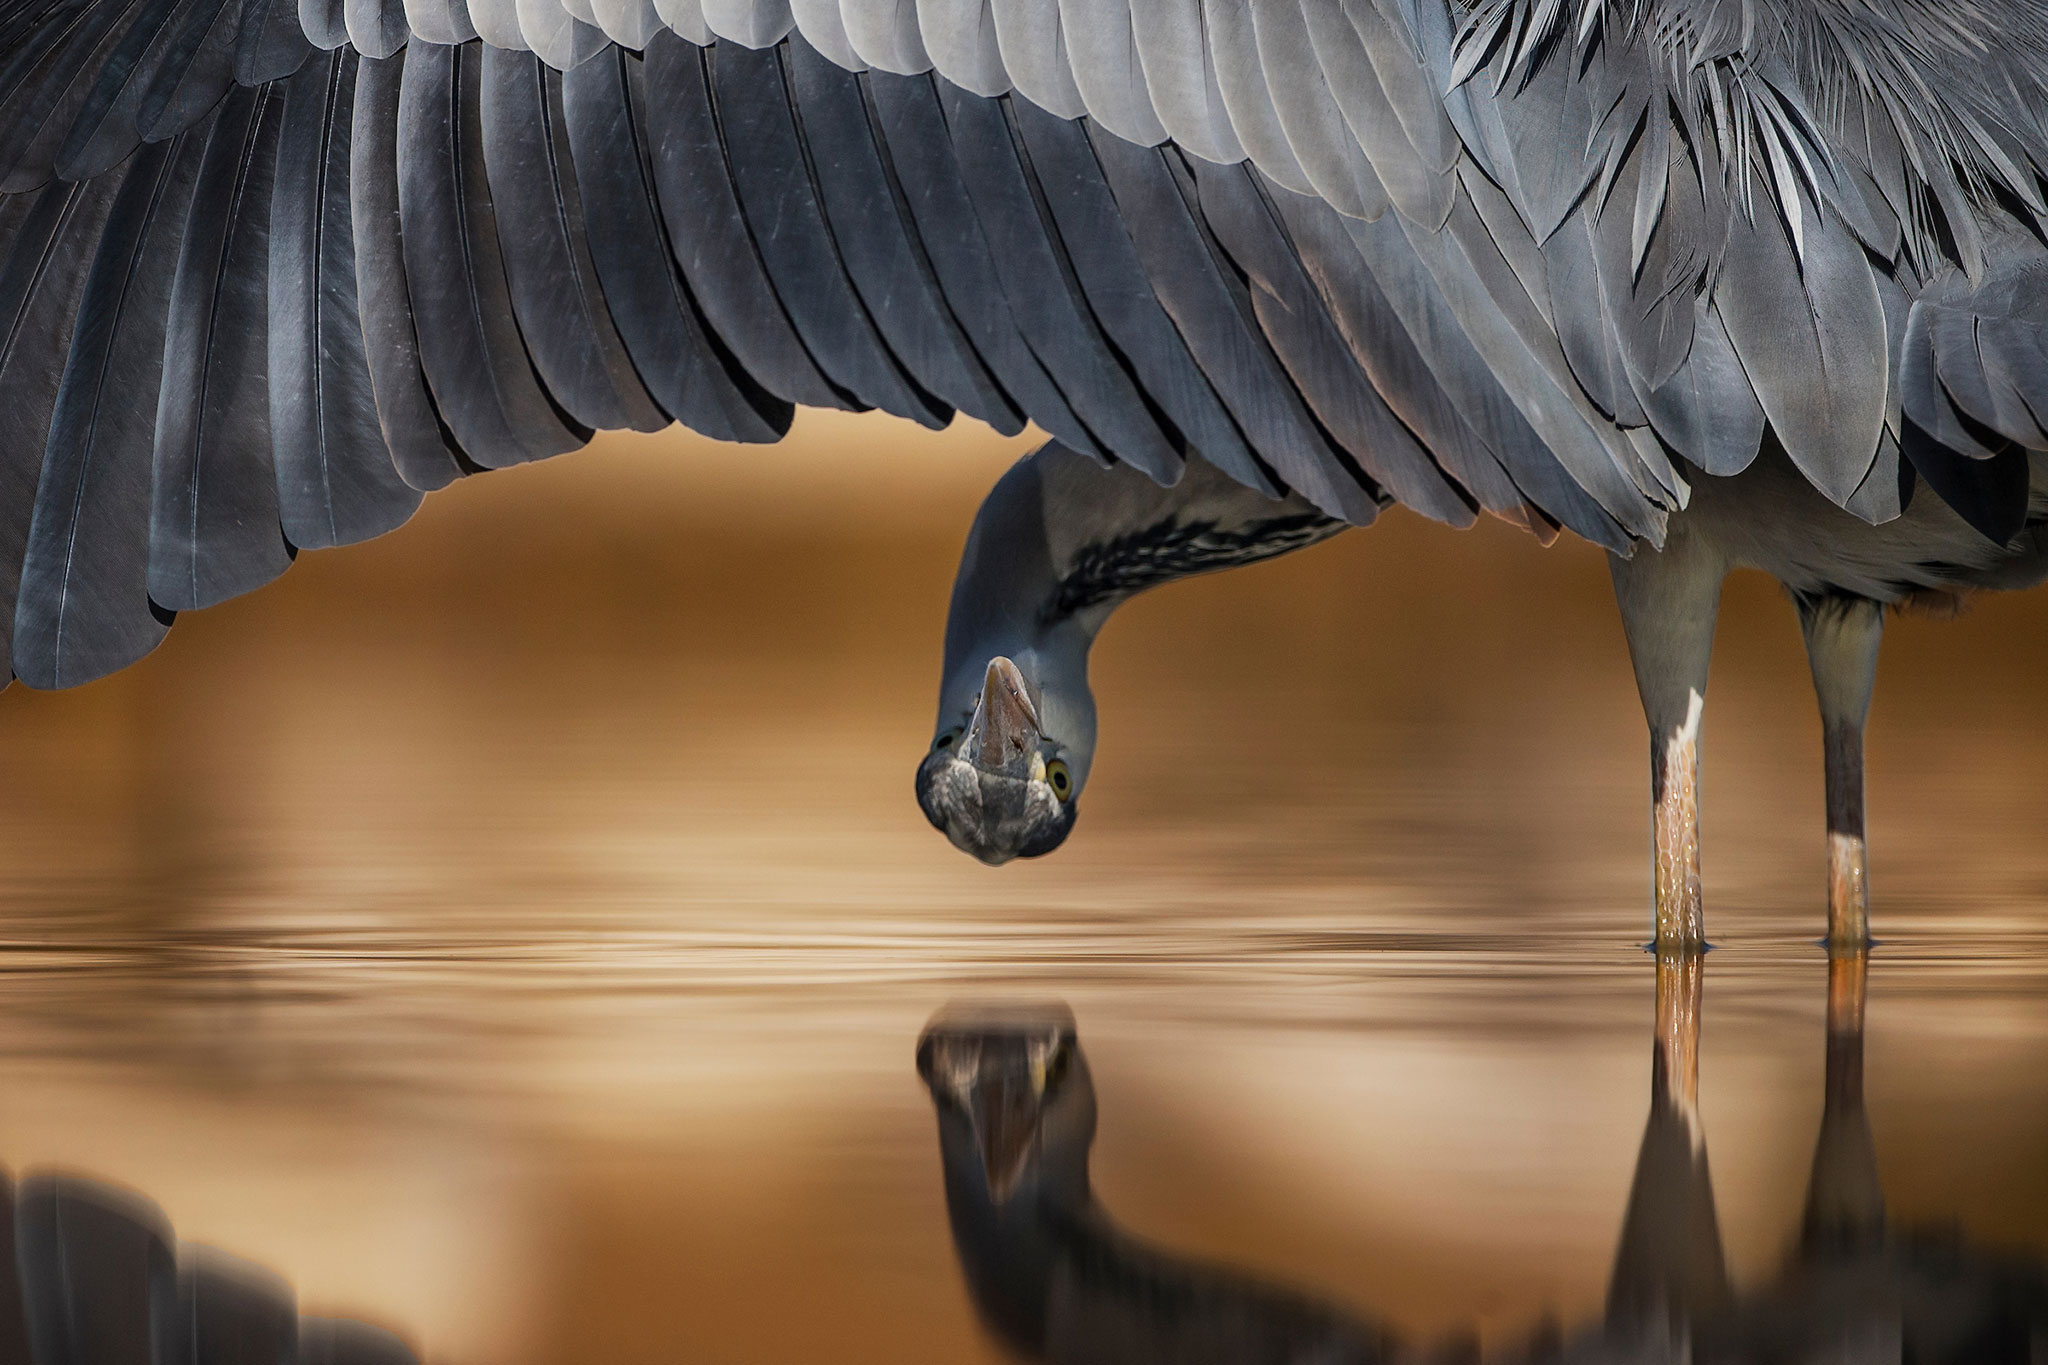 13 Photos Capture the Beauty and Ferocity of Birds